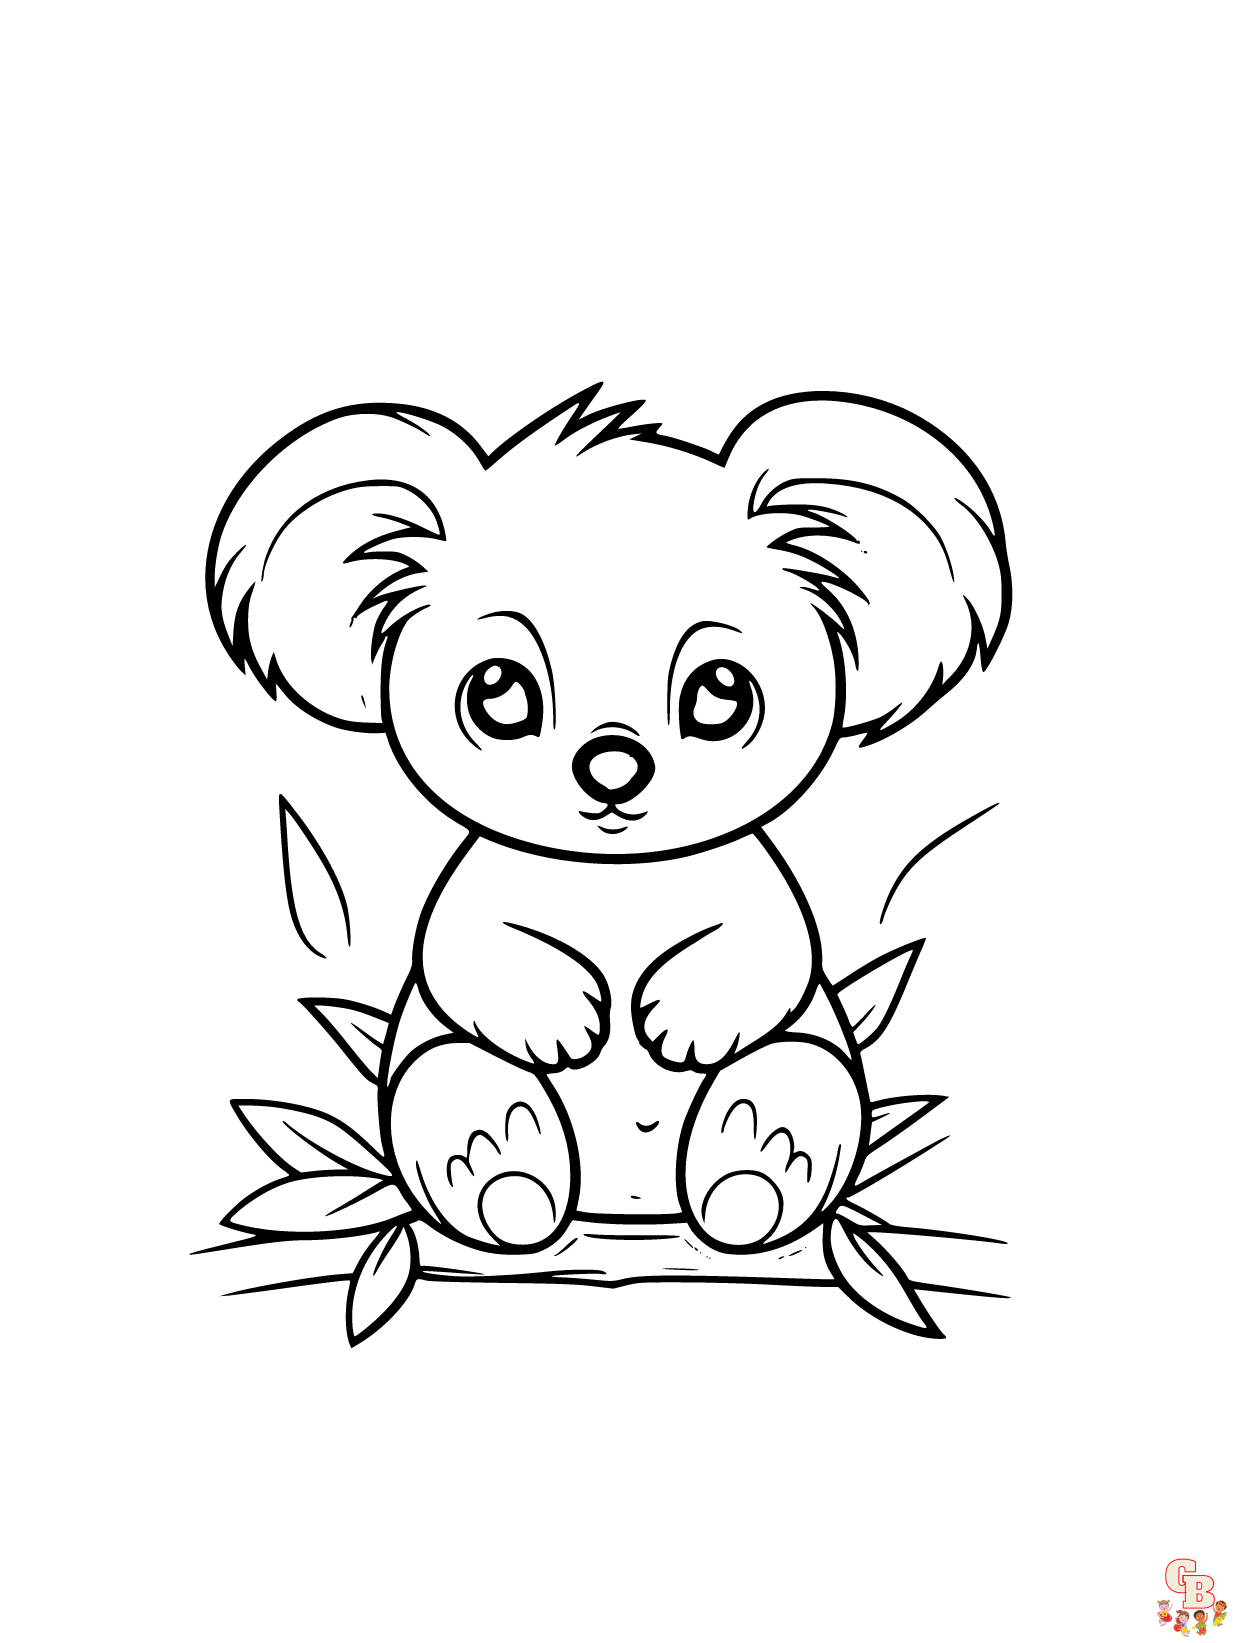 Free printable koala coloring pages